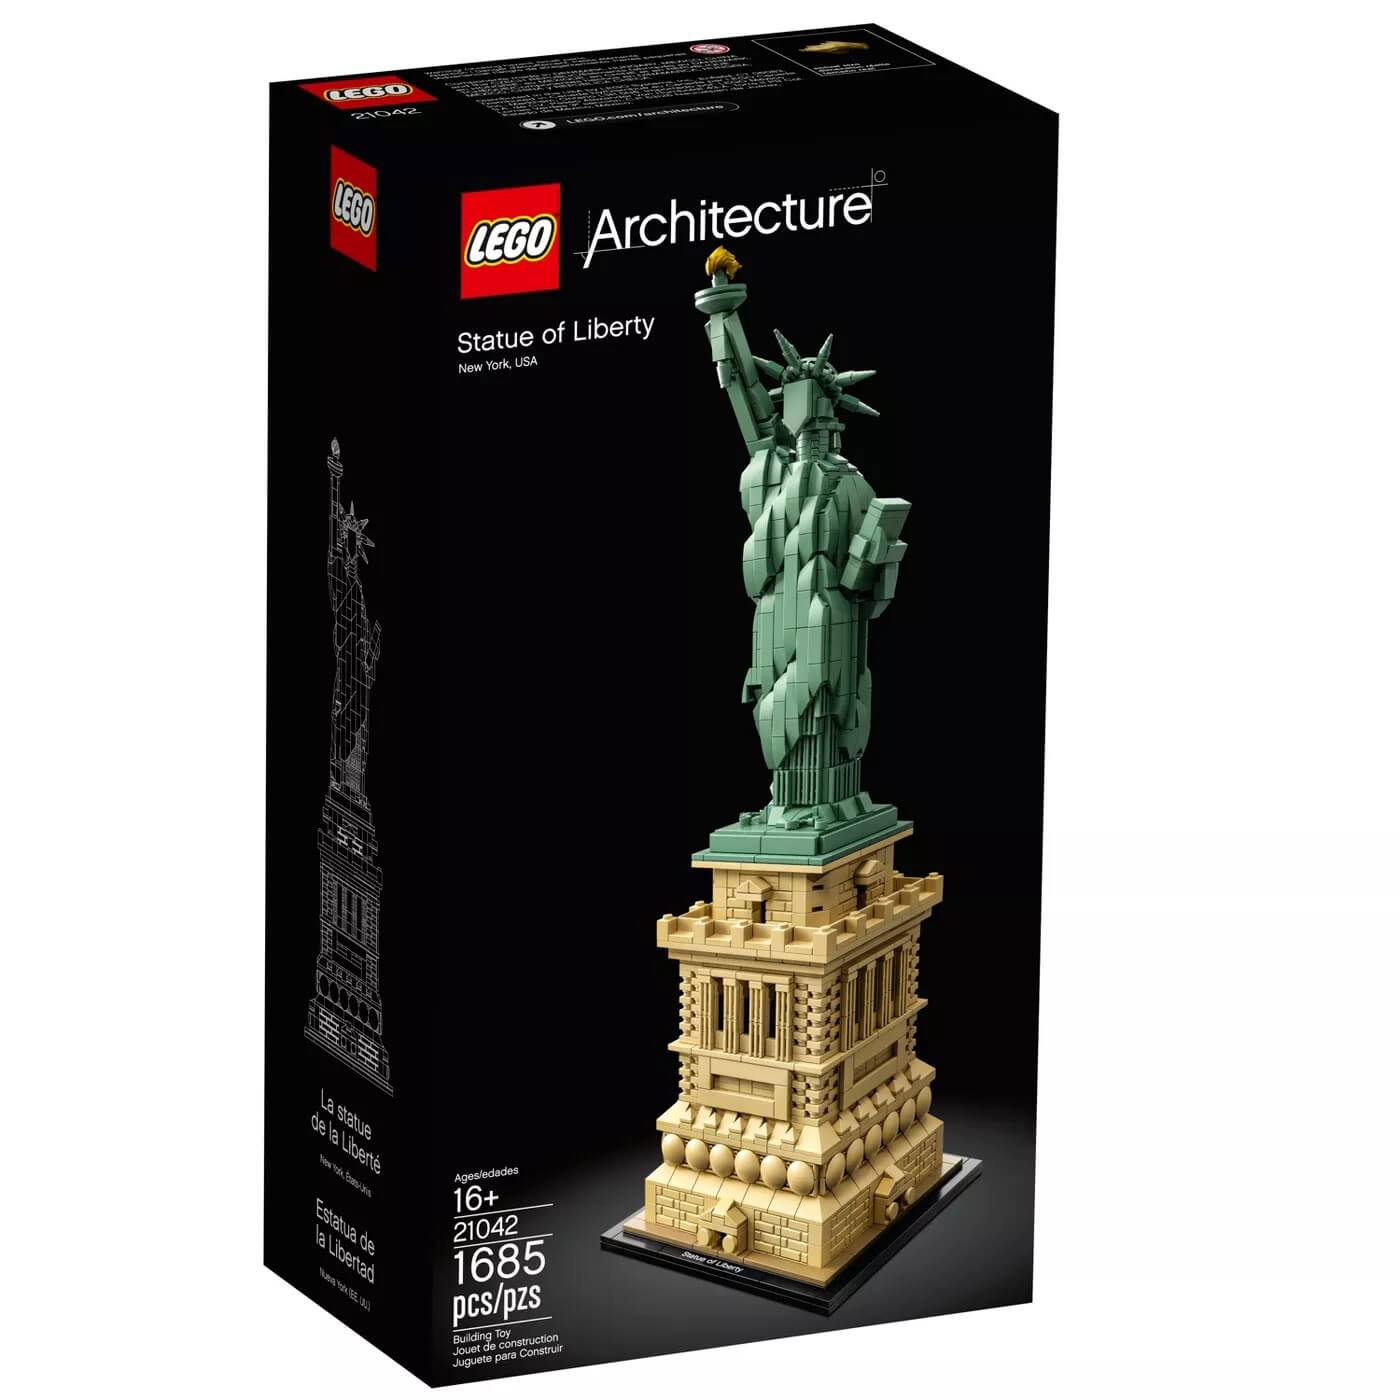 LEGO Architecture Statue of Liberty 1685 Piece Building Set (21042)